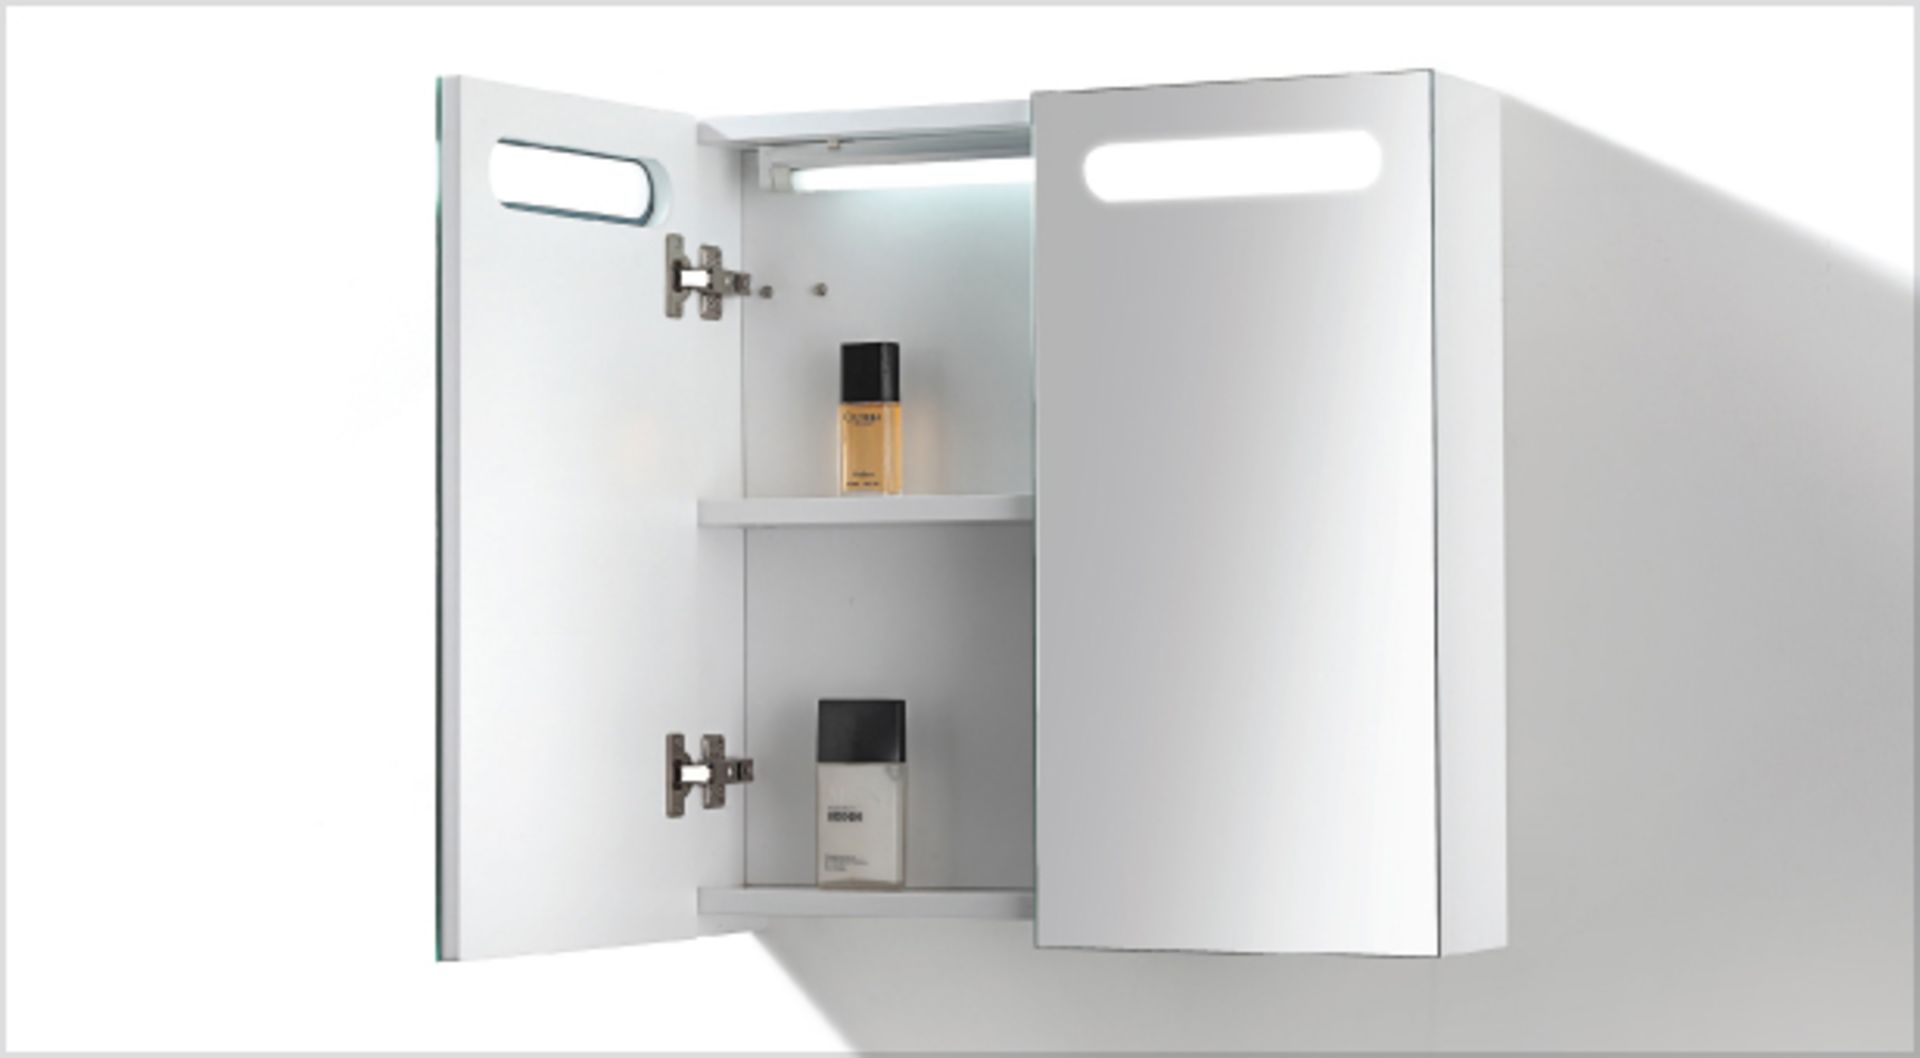 1 x Contemporary Bathroom Eden Mirror Cabinet 45 - A-Grade - Ref:AMC12-045 - CL170 - Location: Notti